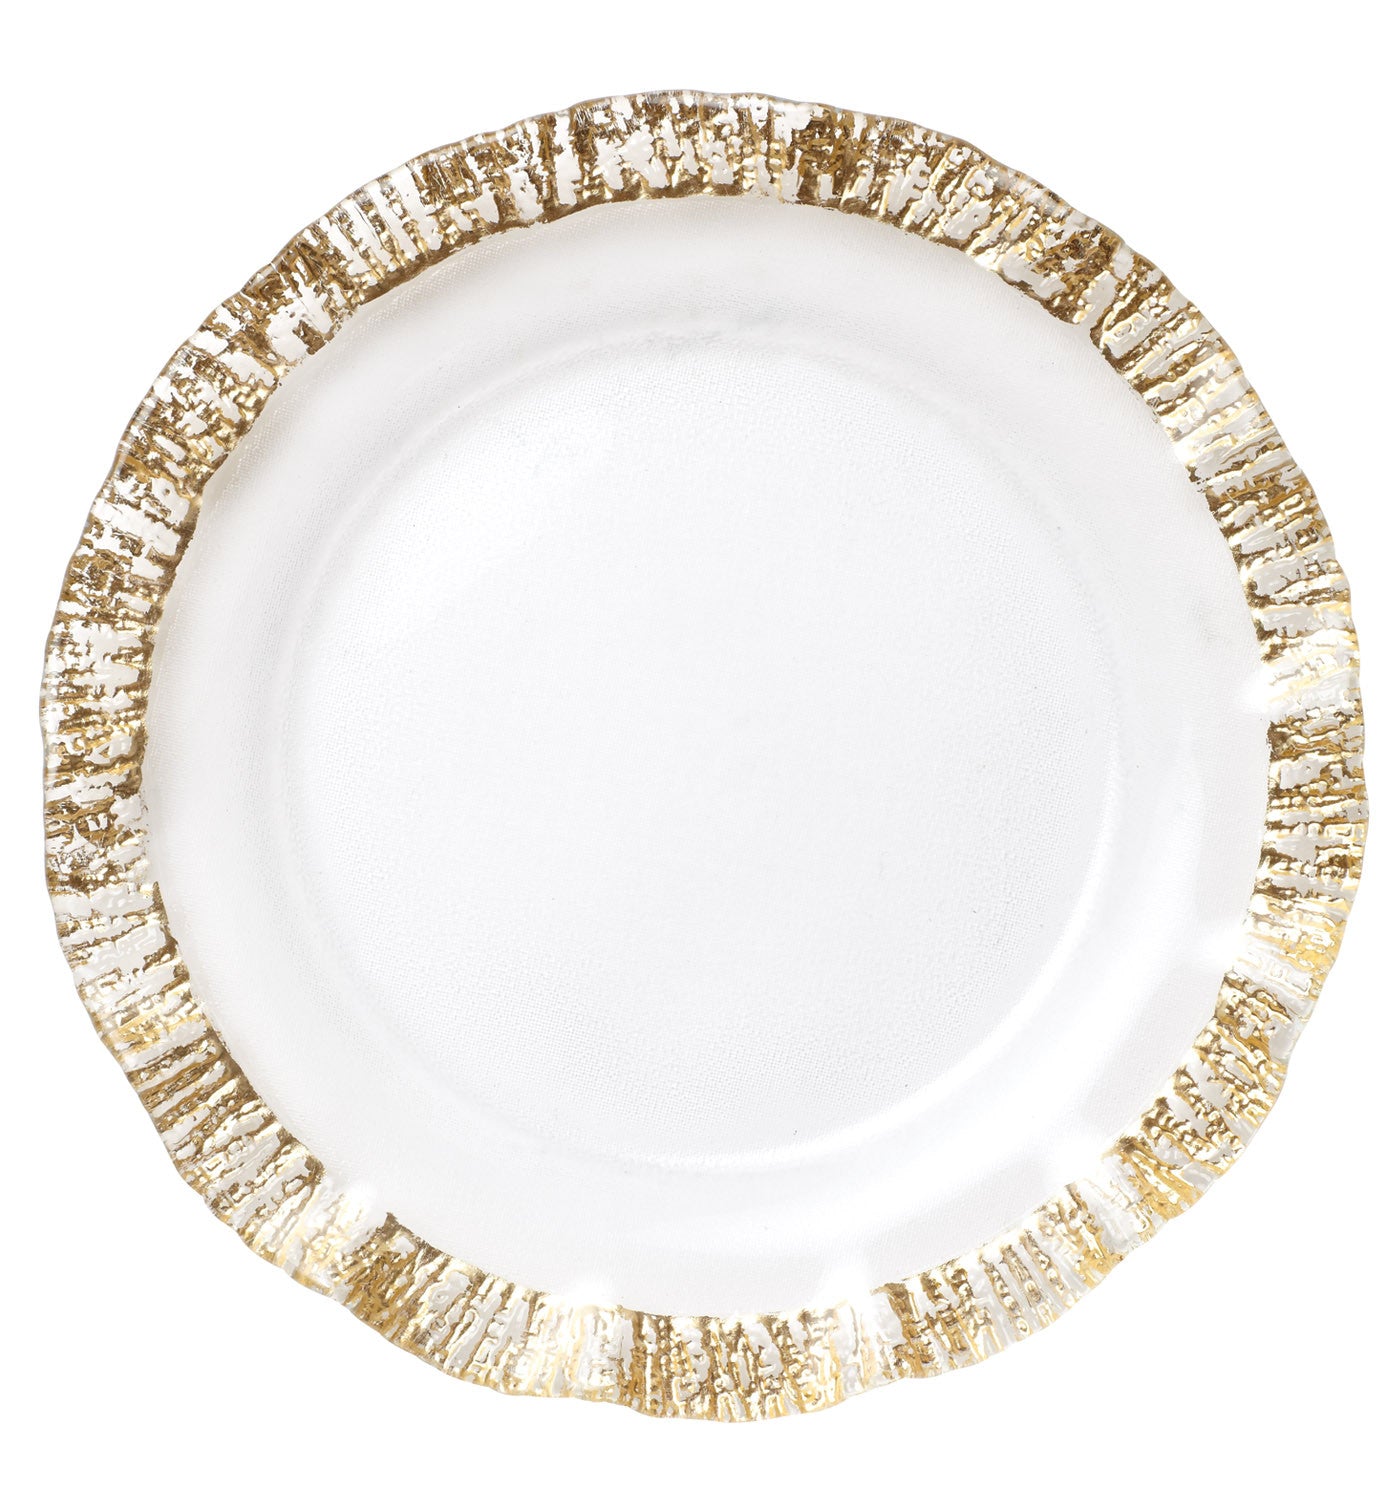 VIETRI: Rufolo Glass Gold Service Plate Charger - Artistica.com